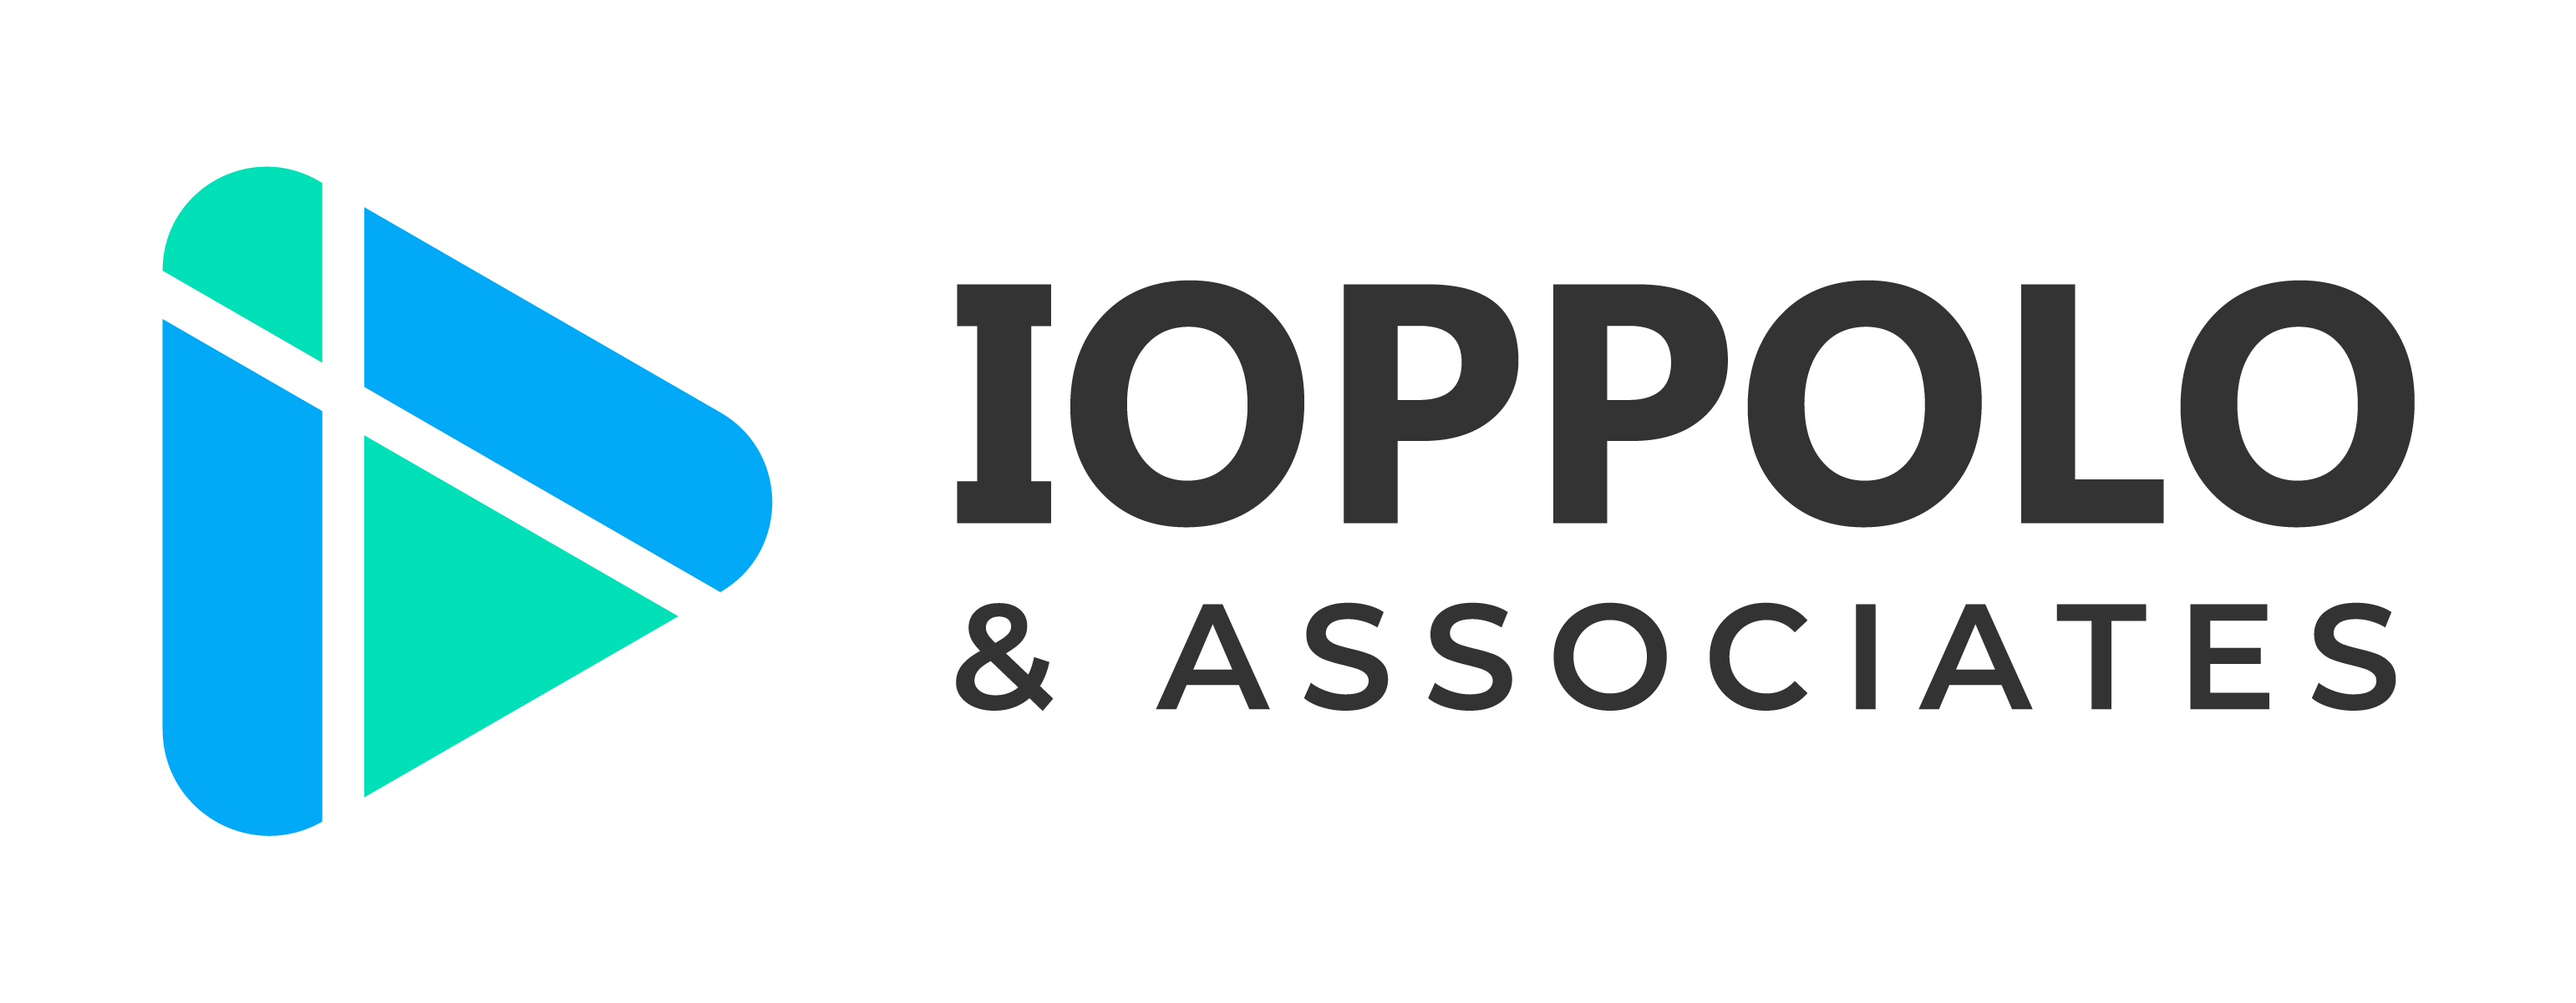 Ioppolo &amp; Associates website